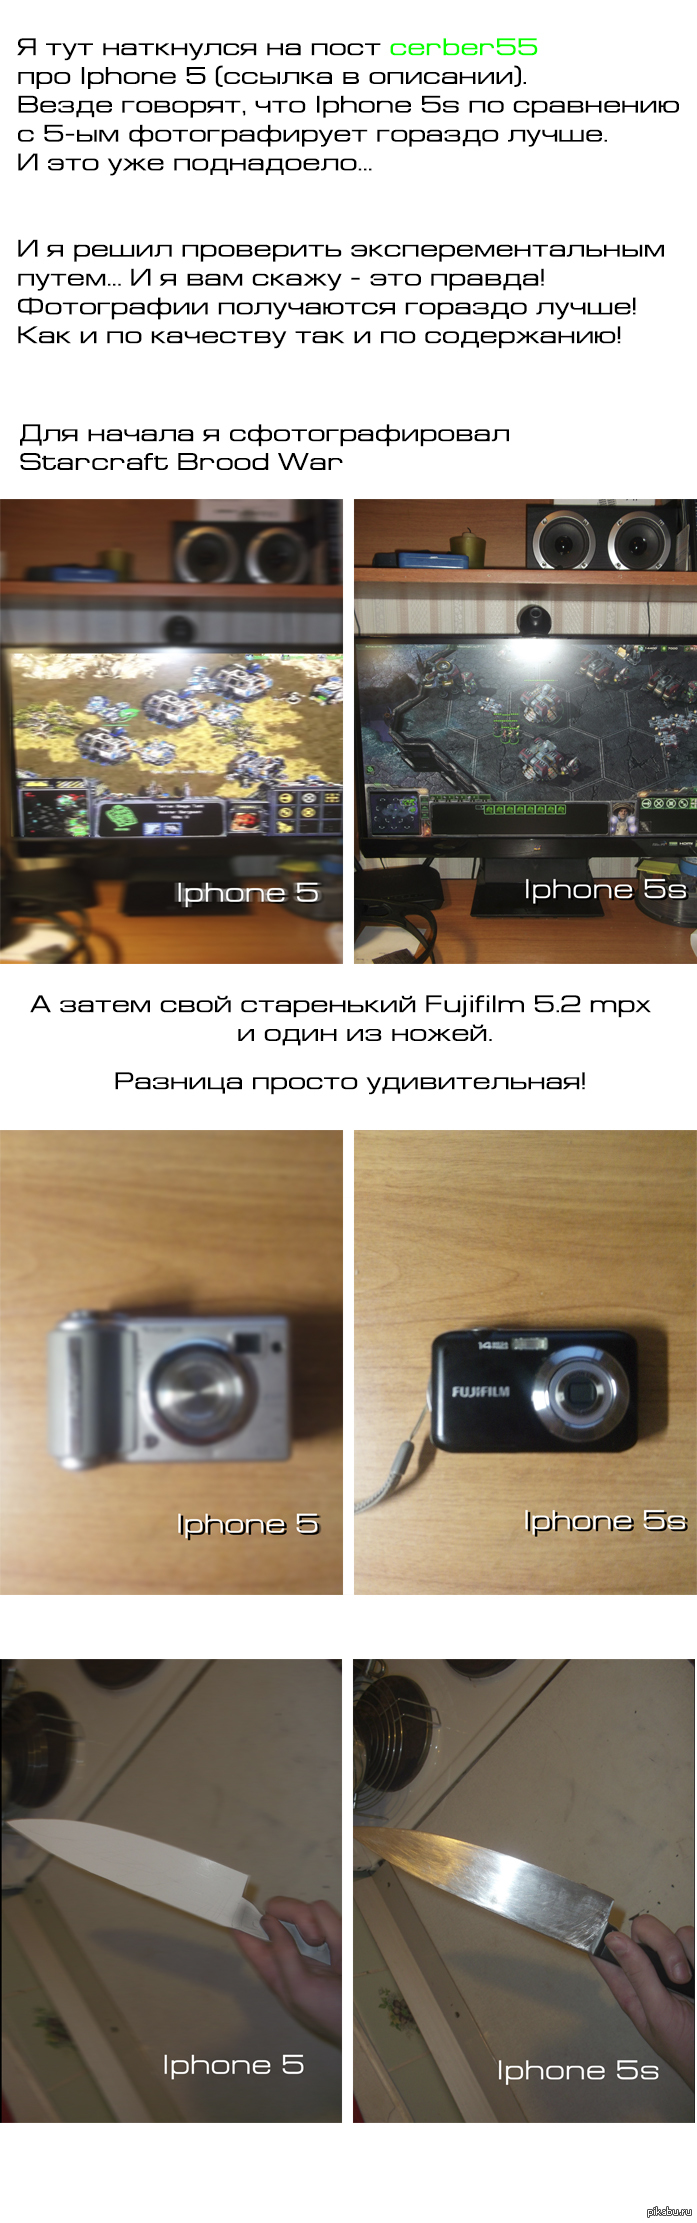  Iphone 5s     !     <a href="http://pikabu.ru/story/s_iphone_5s_vse_foto_stanovyatsya_luchshe_1551899">http://pikabu.ru/story/_1551899</a>